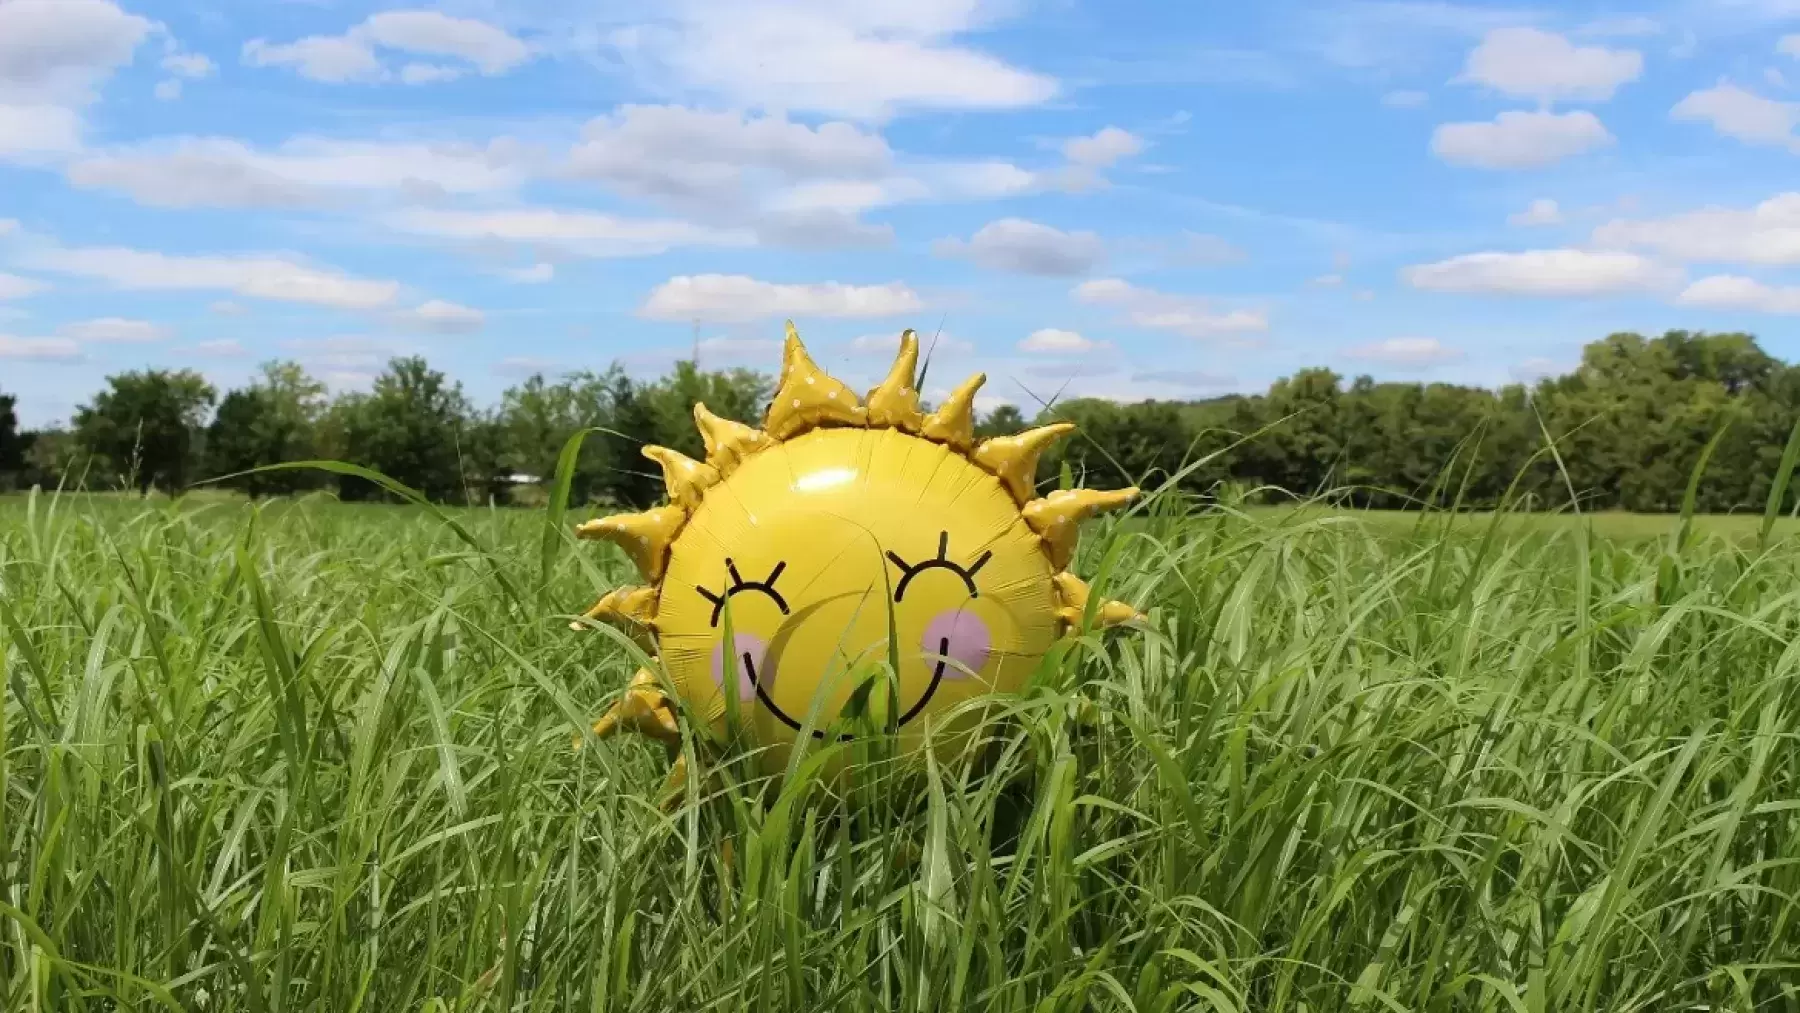 Smiling sun balloon in grass